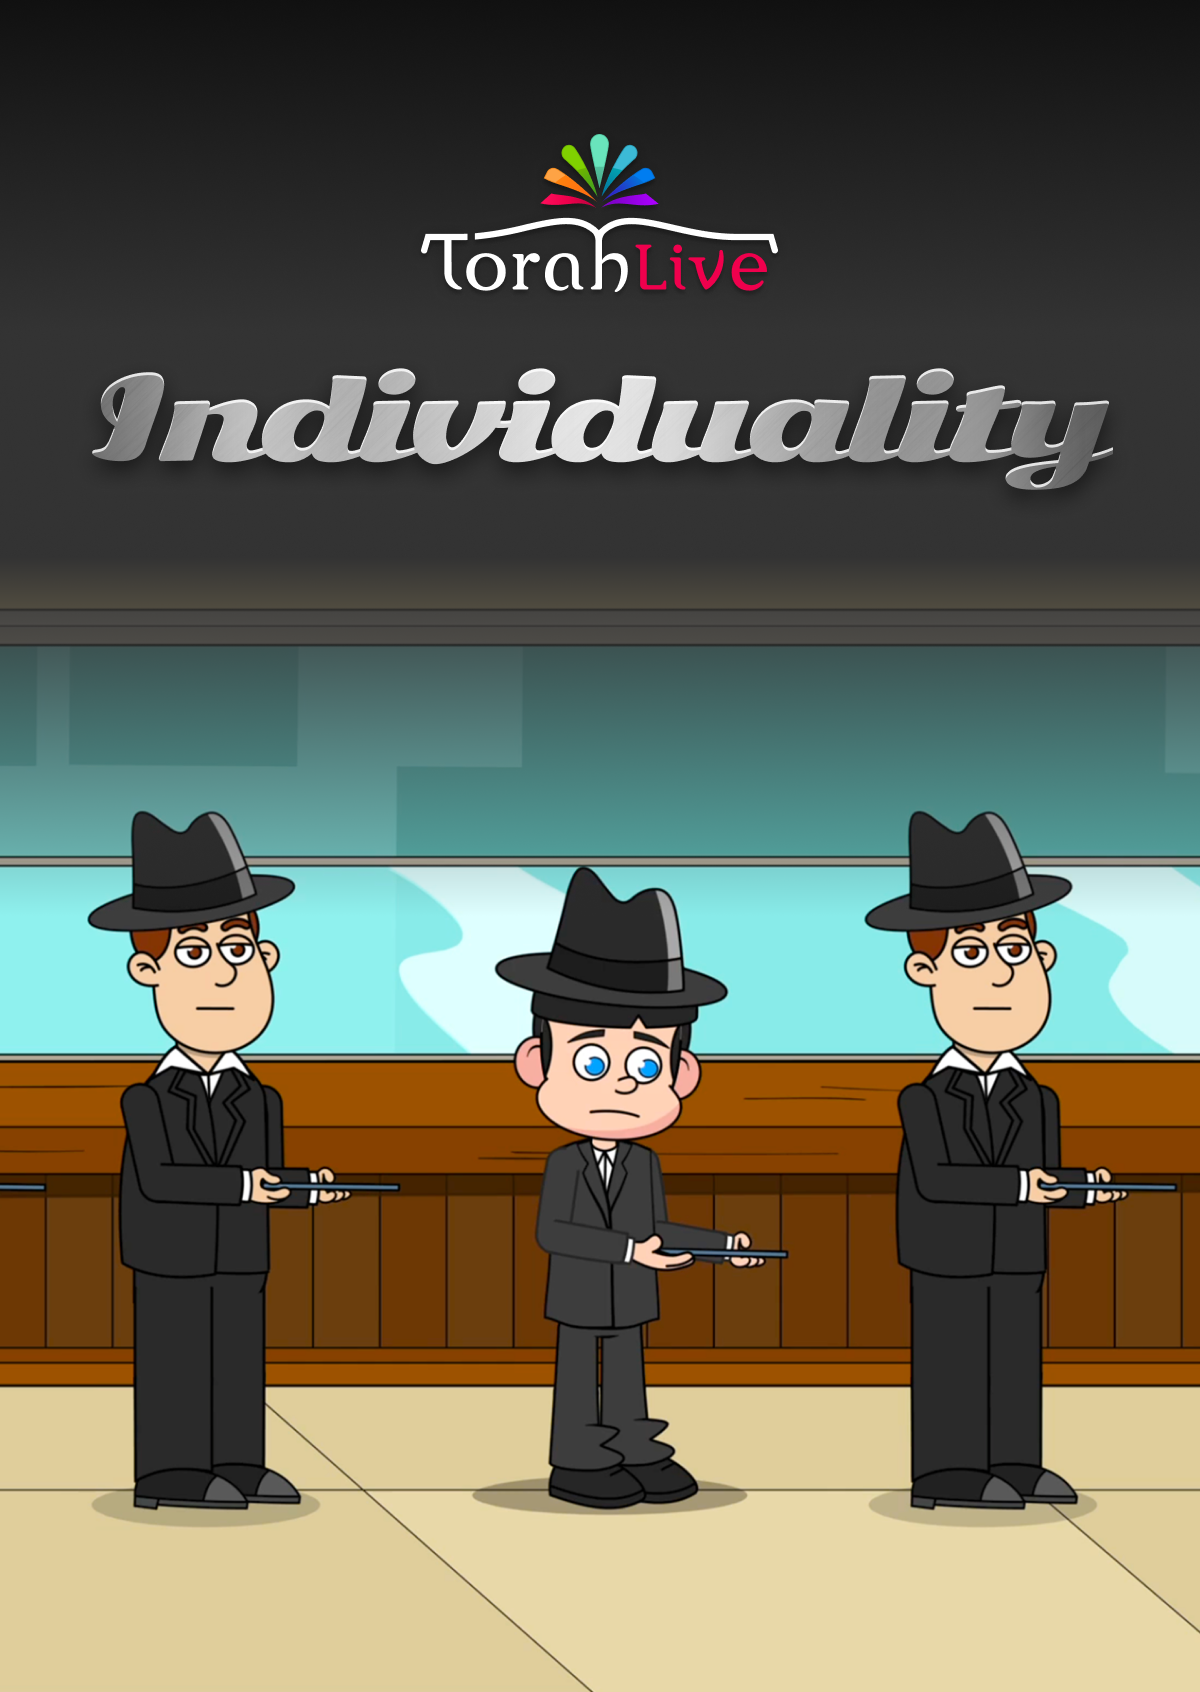 Torah Live - Individuality (Video)